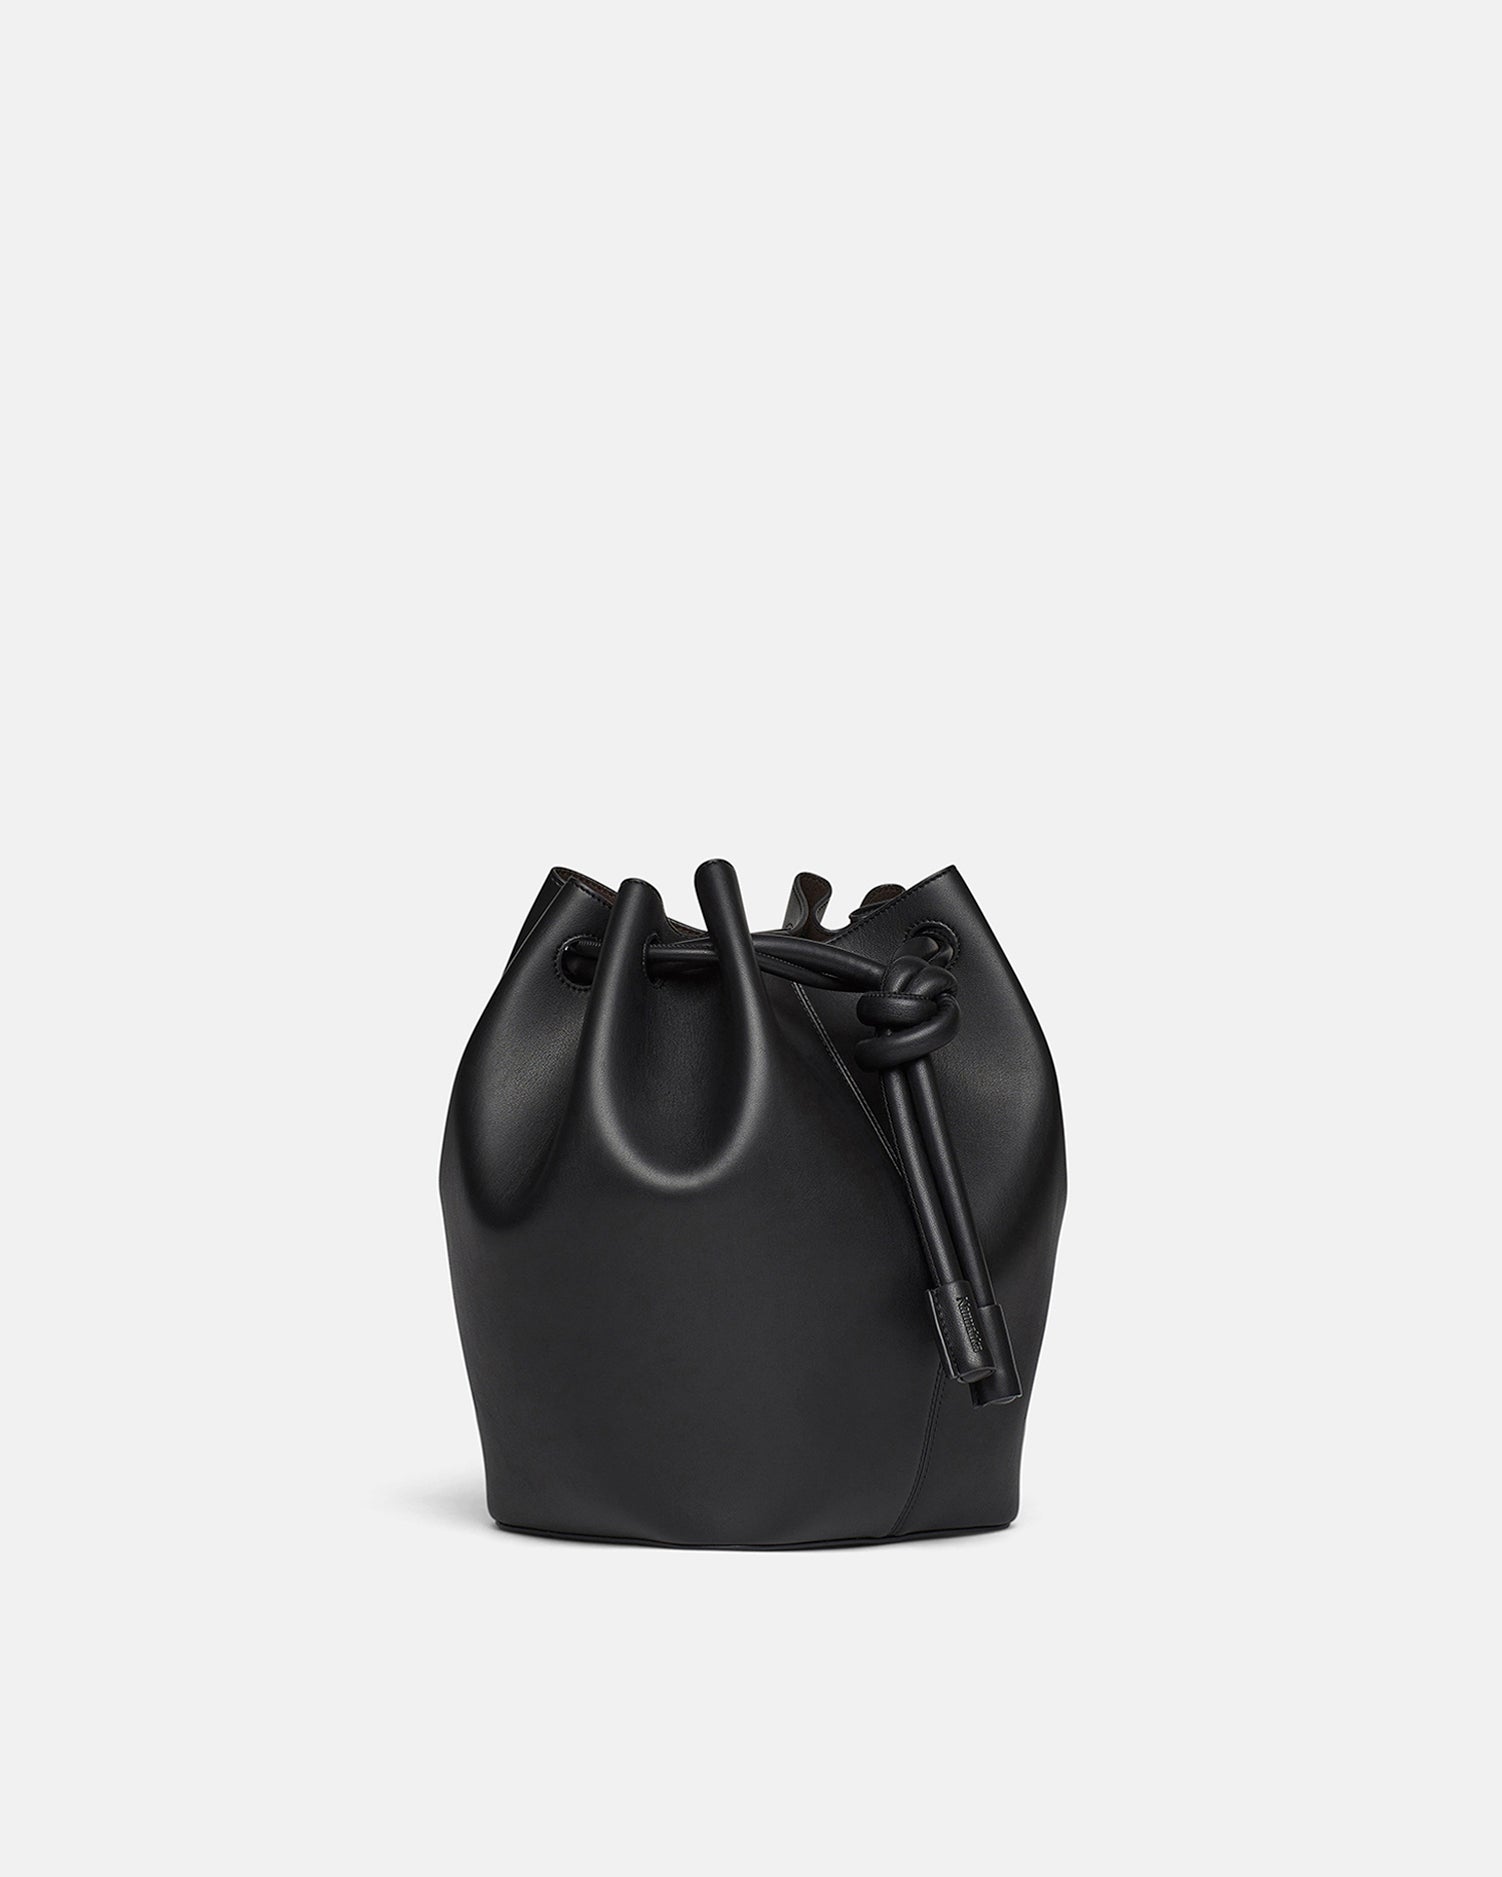 Nanushka Black Small Elongated Bucket Bag